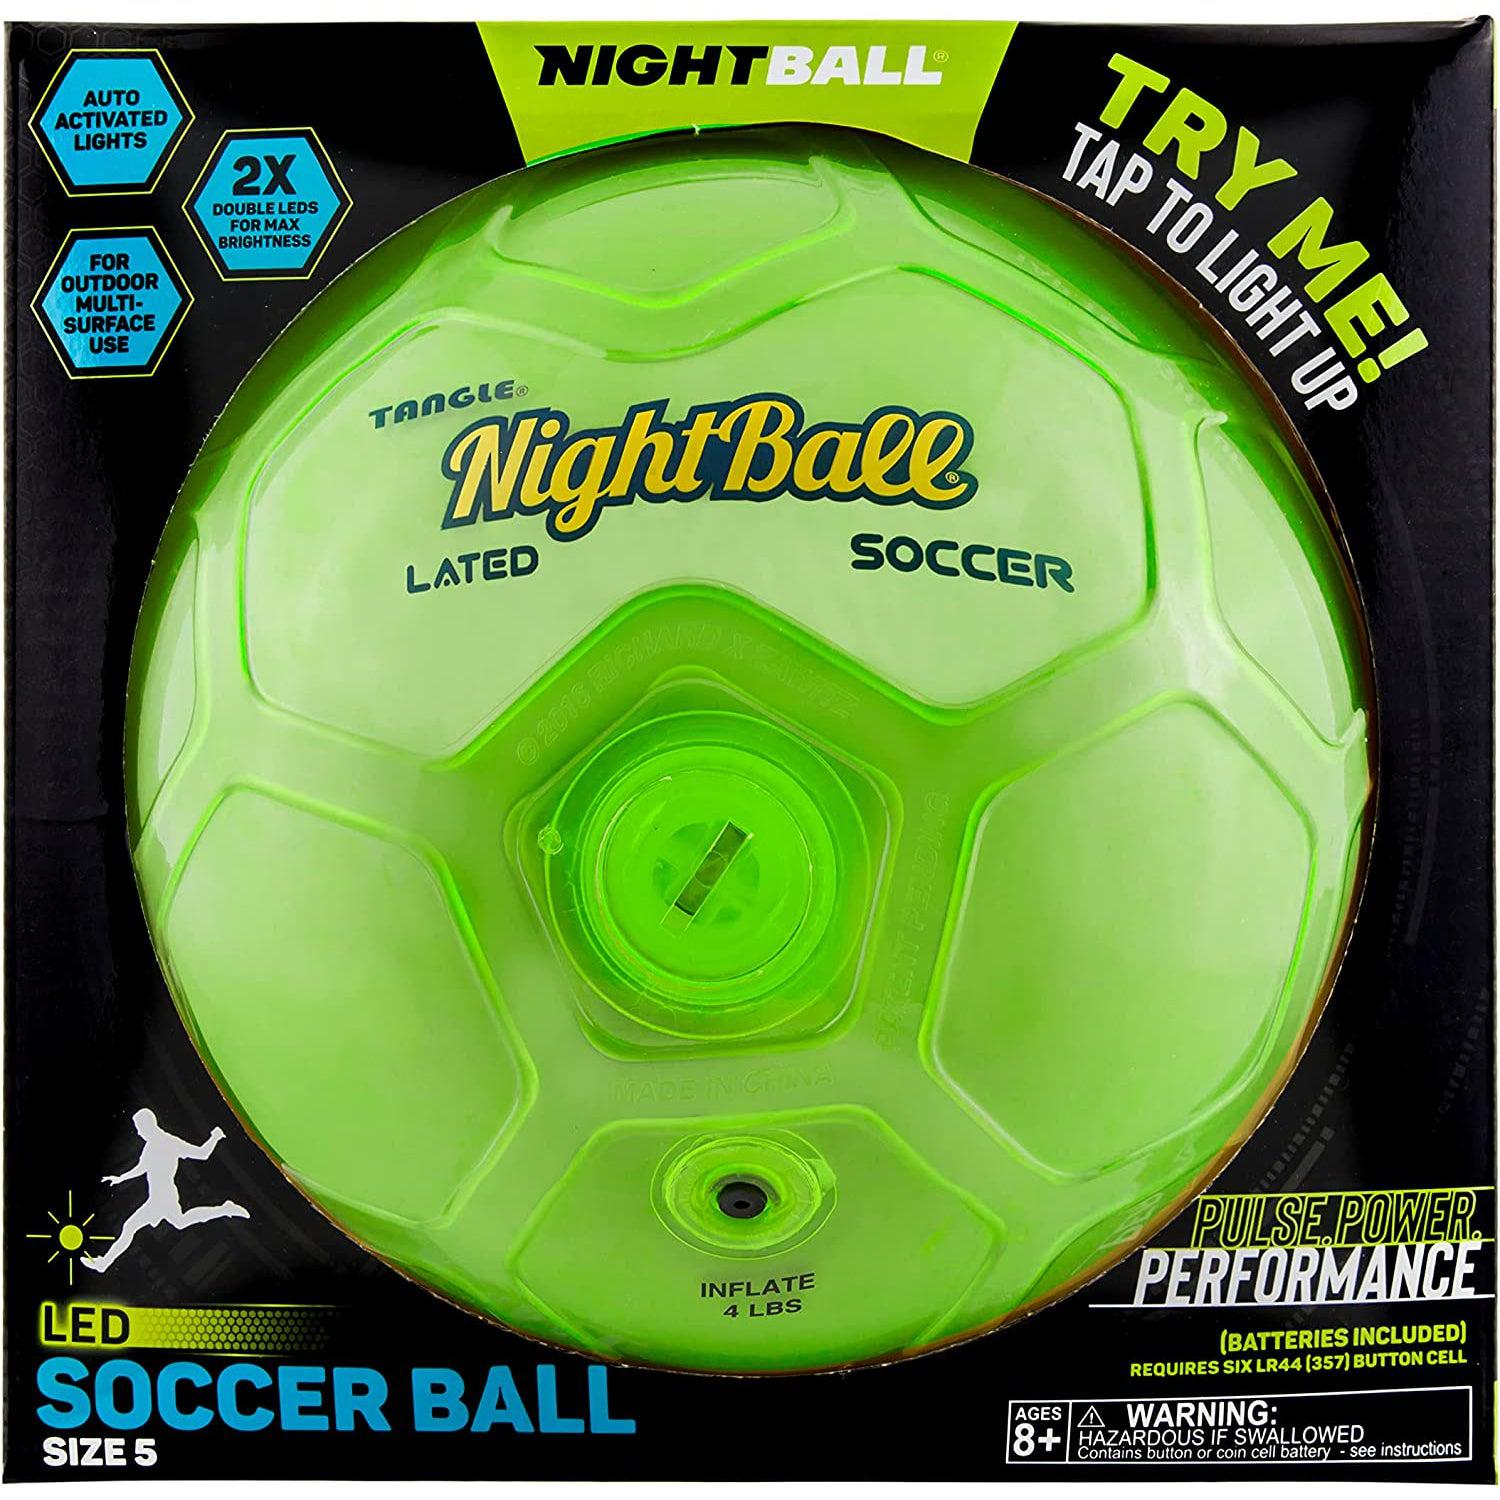 Tangle-Nightball Glow in the Dark Light Up Soccer Ball Green-12801-Legacy Toys